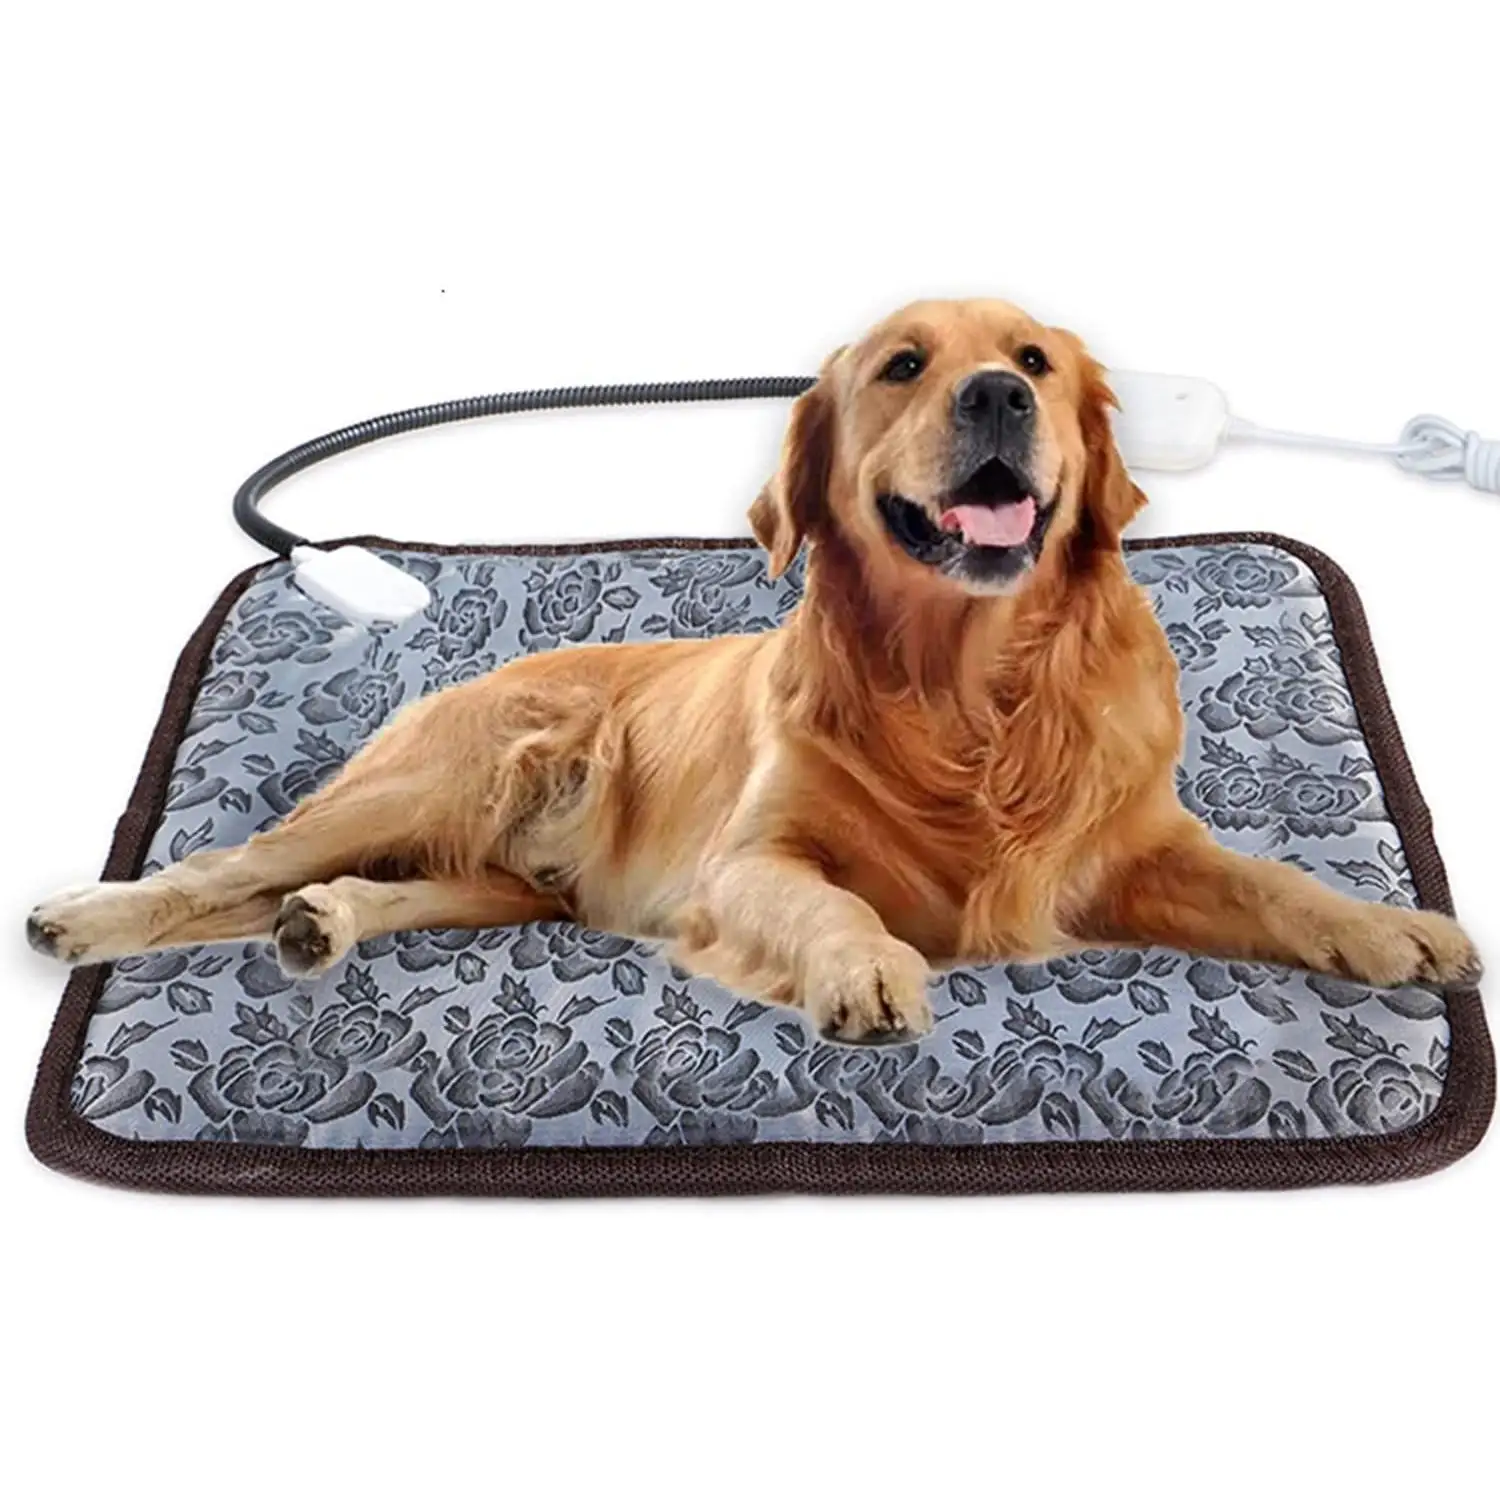 सुरक्षा इनडोर टिकाऊ बिस्तर कंबल समायोज्य तापमान स्वयं बिजली हीटिंग बिल्ली कुत्ते पालतू चटाई पैड